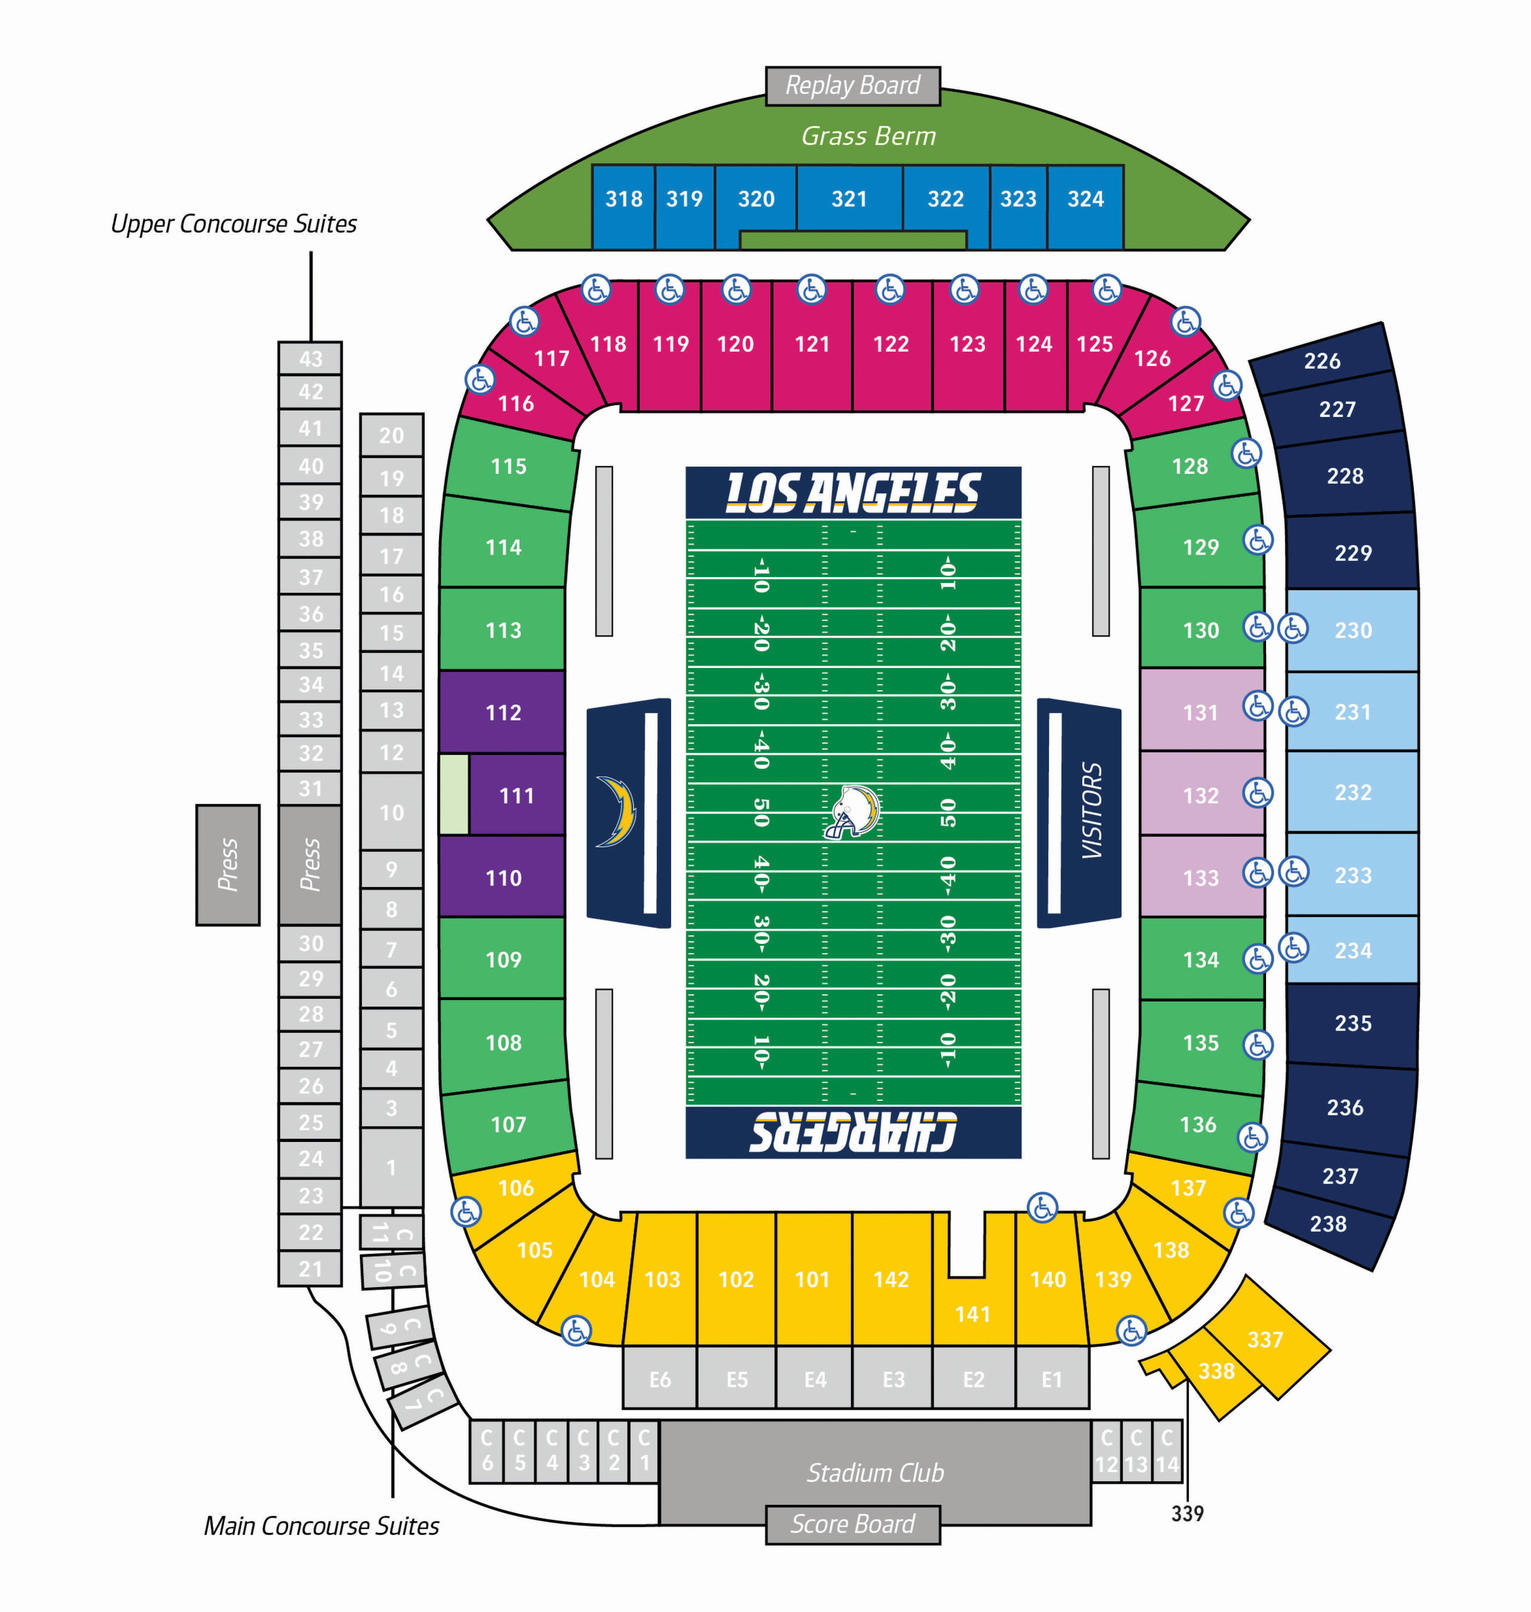 La Chargers Stadium Seating Chart